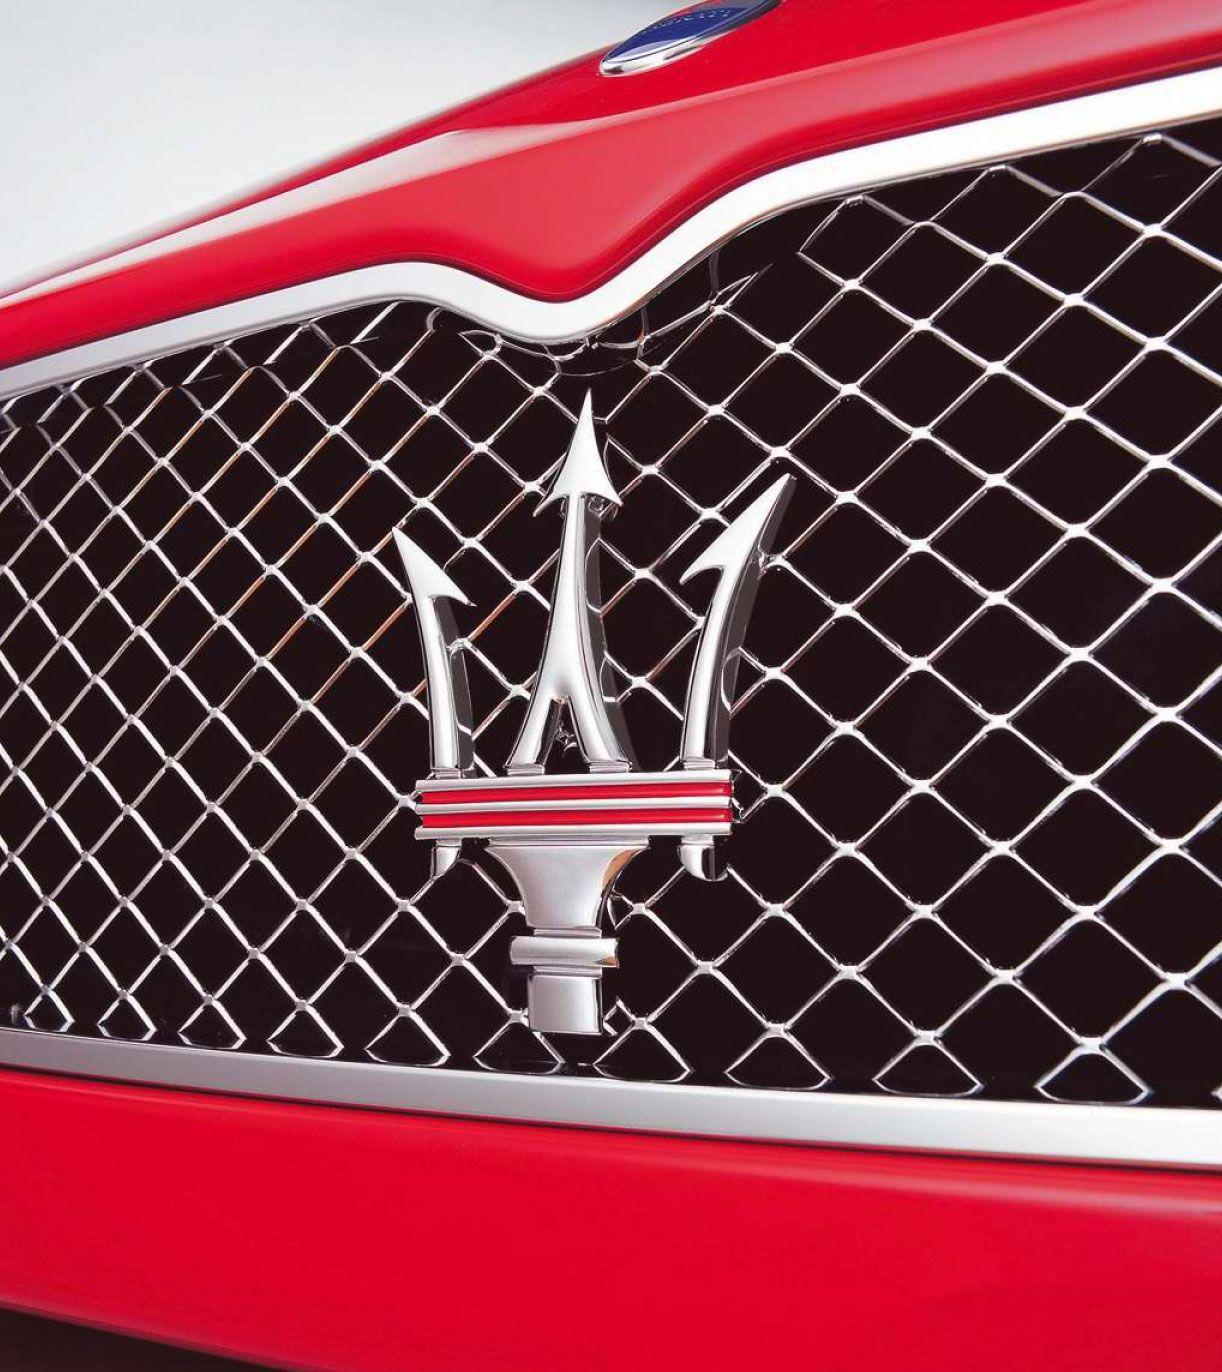 Trident Car Logo - Maserati Logo, Maserati Car Symbol Meaning and History. Car Brand